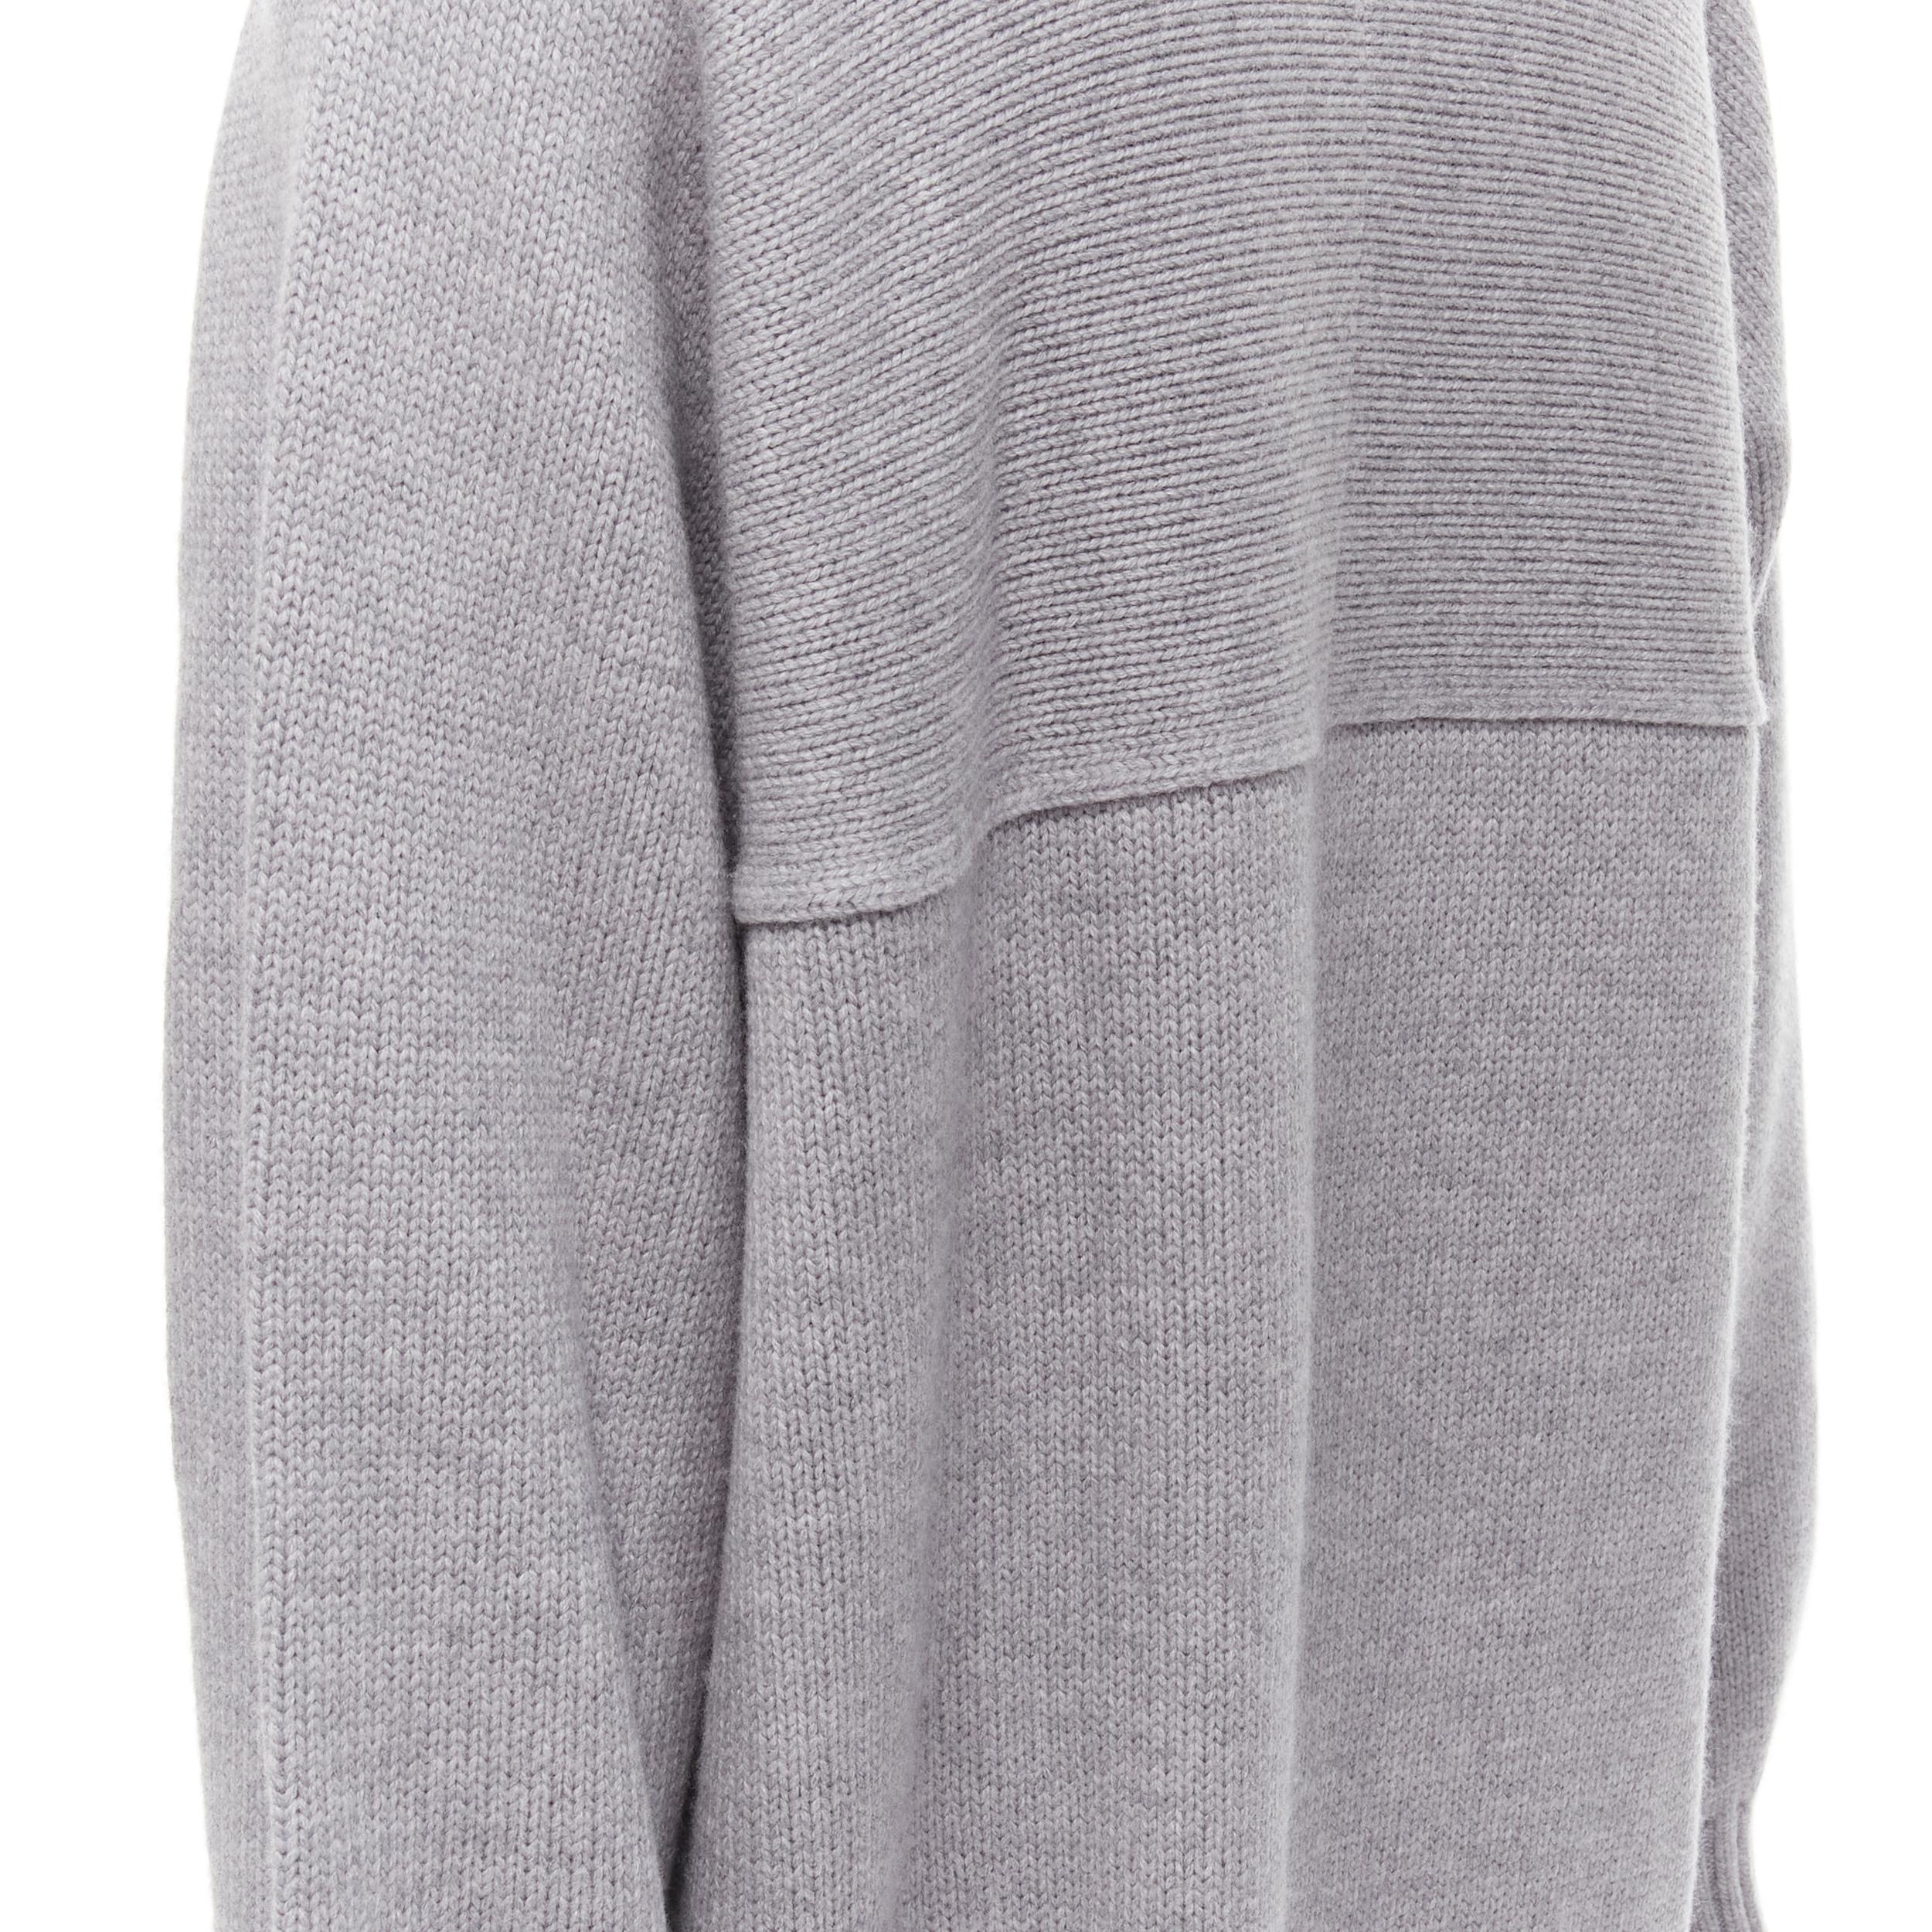 ALEXANDER WANG grey merino wool chunky knit zip trim sweater dress M 5